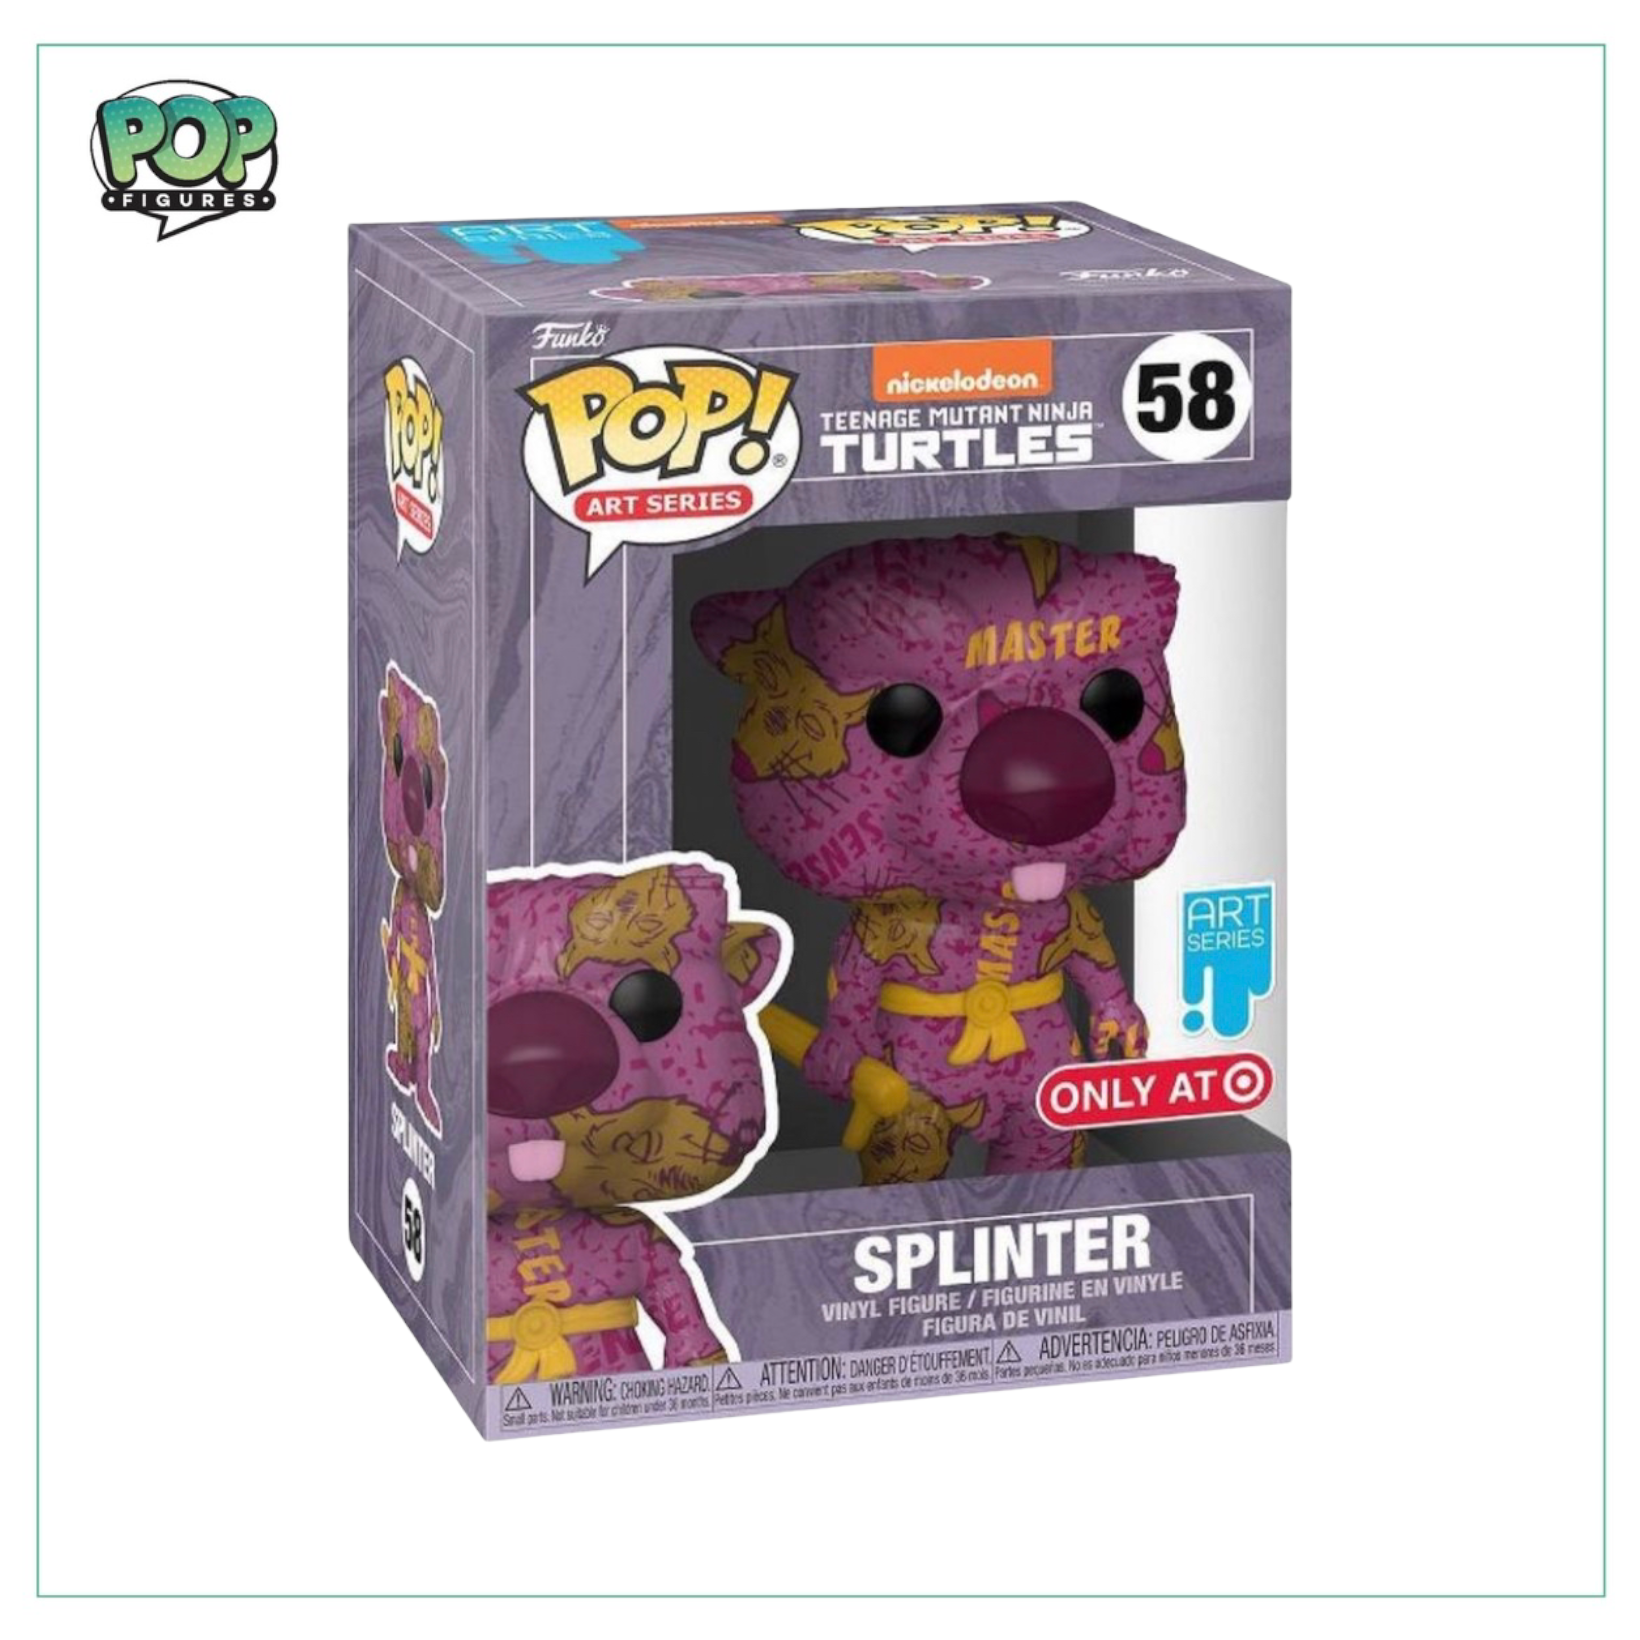 Splinter (Artist Series) #58  Funko Pop! Teenage Mutant Ninja Turtles - Target Exclusive